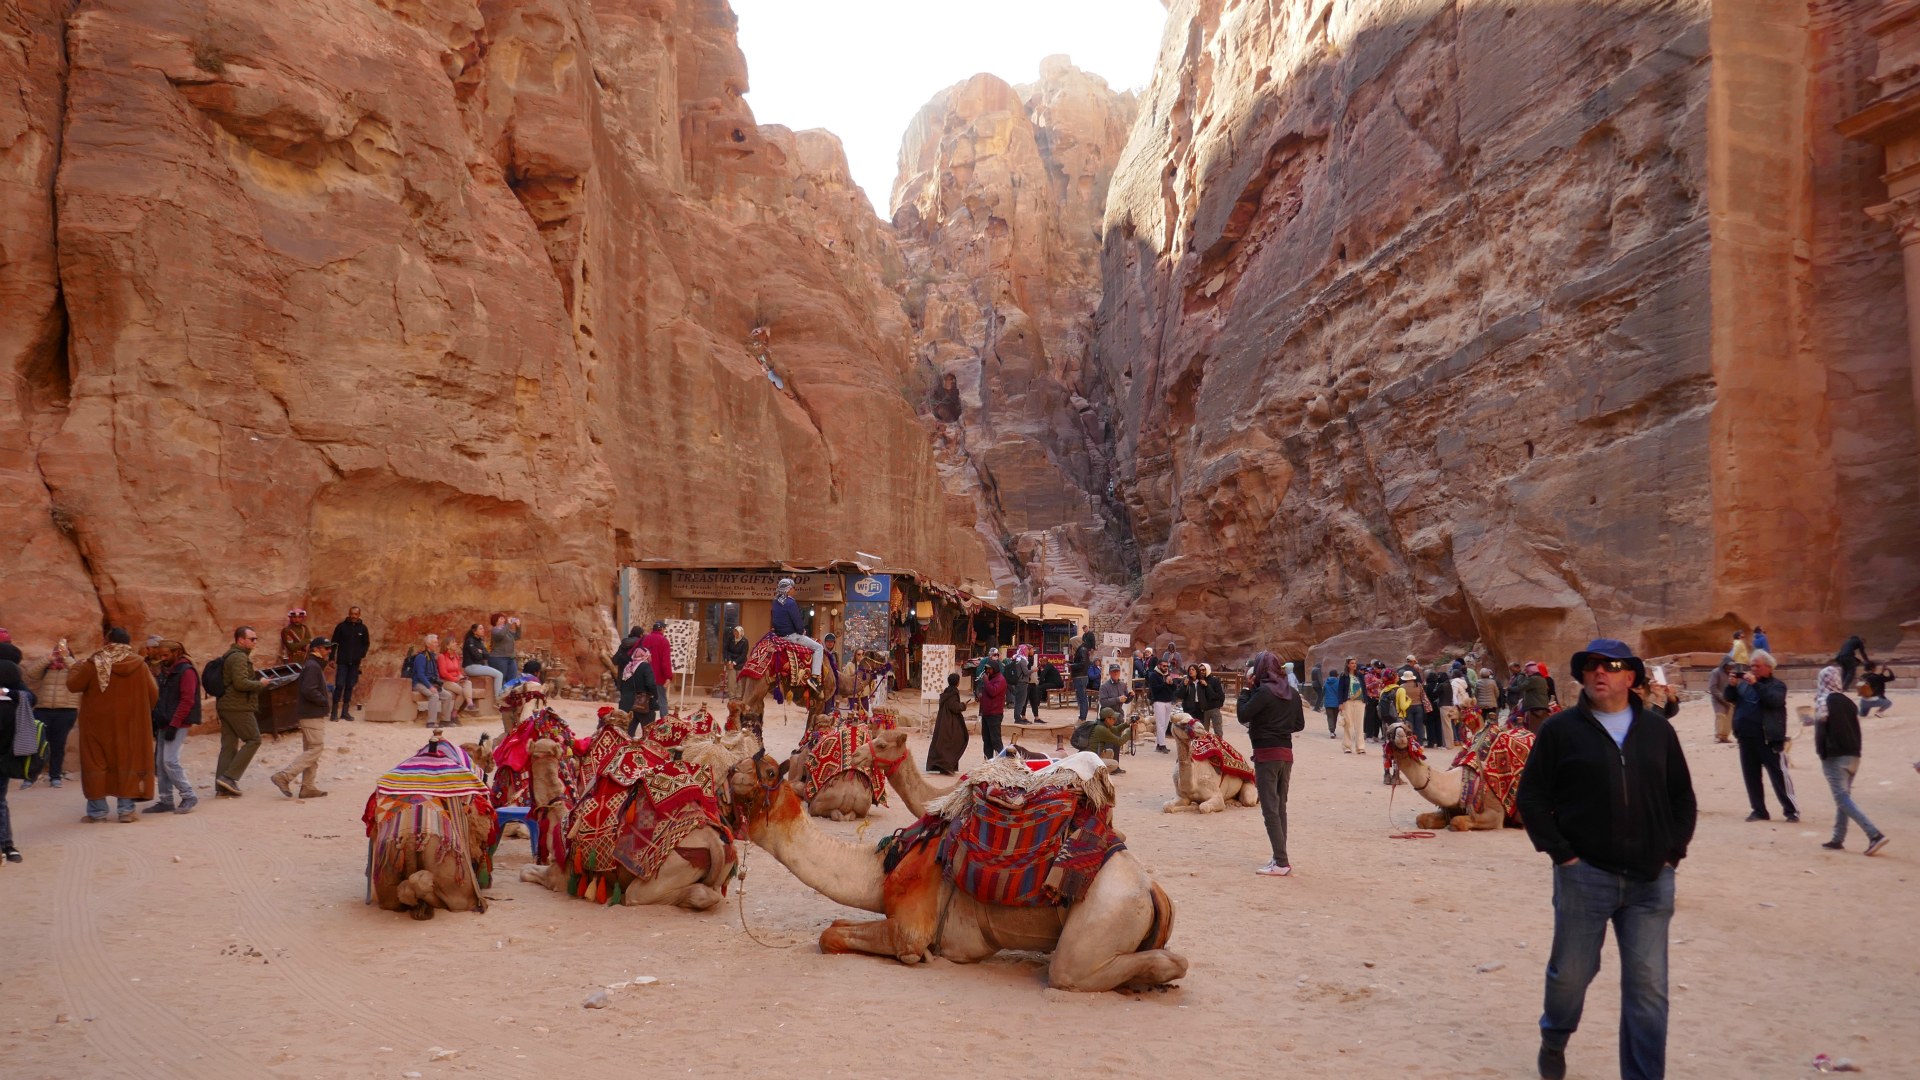 Camels outside The Treasury, Petra